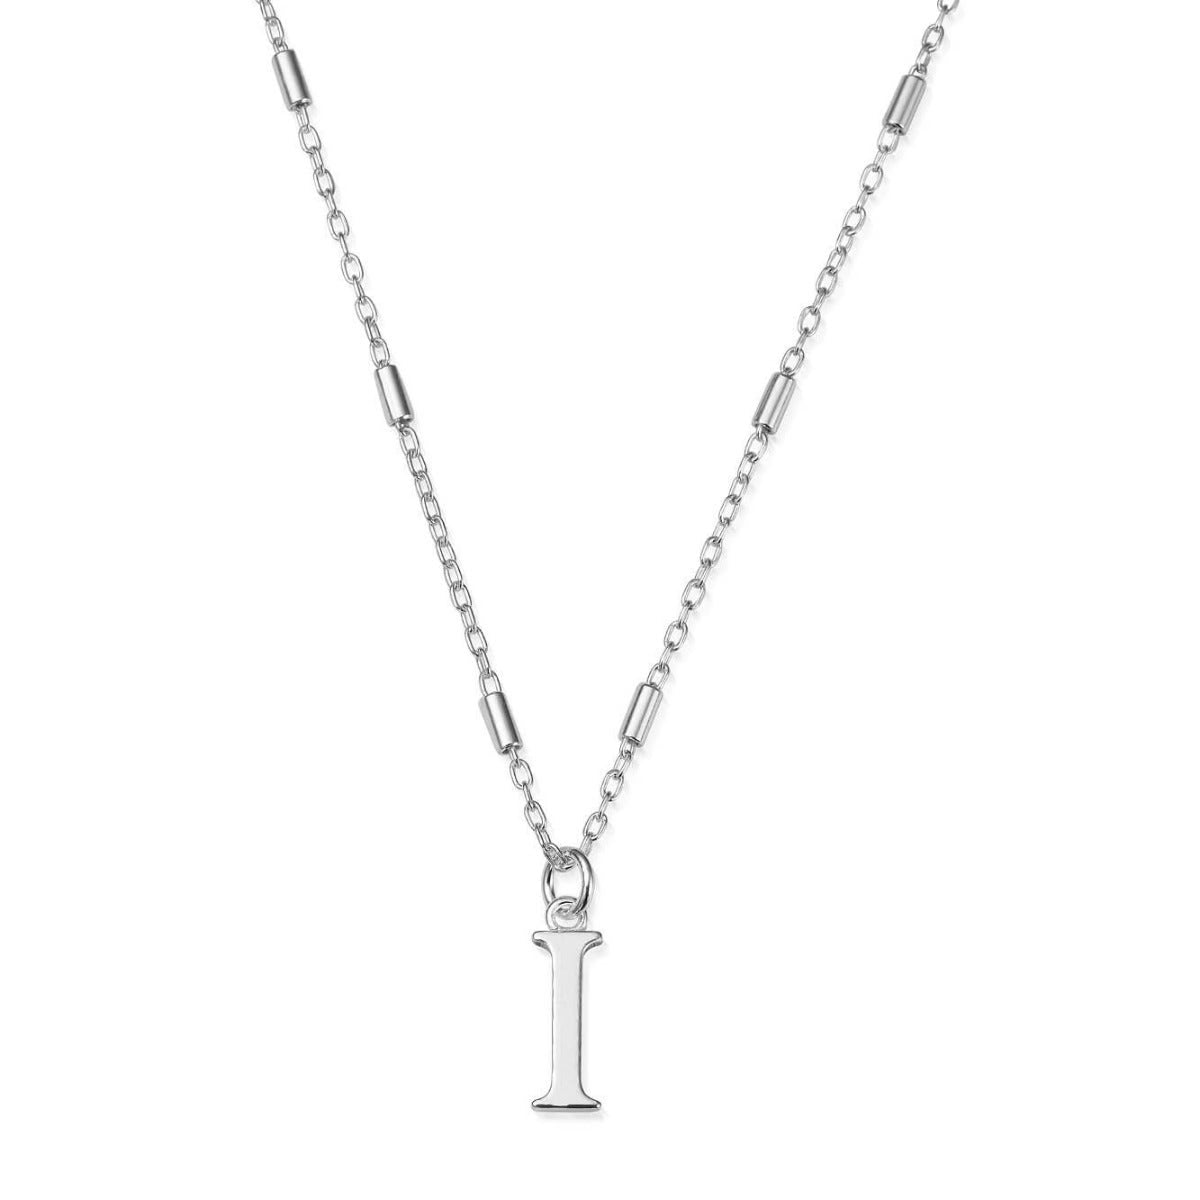 Adjustable Length Initial Necklace | UK Made | ChloBo